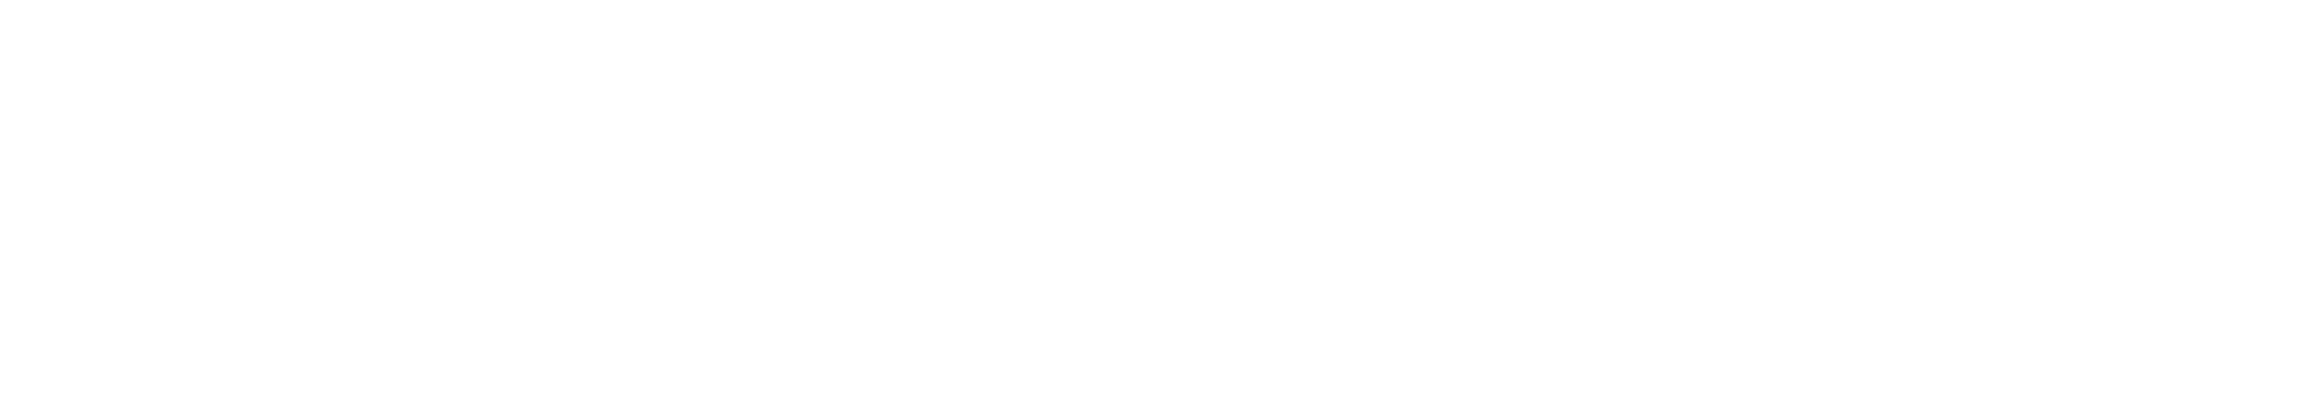 Harbor Group Management logo for Forsythia Court Apartments